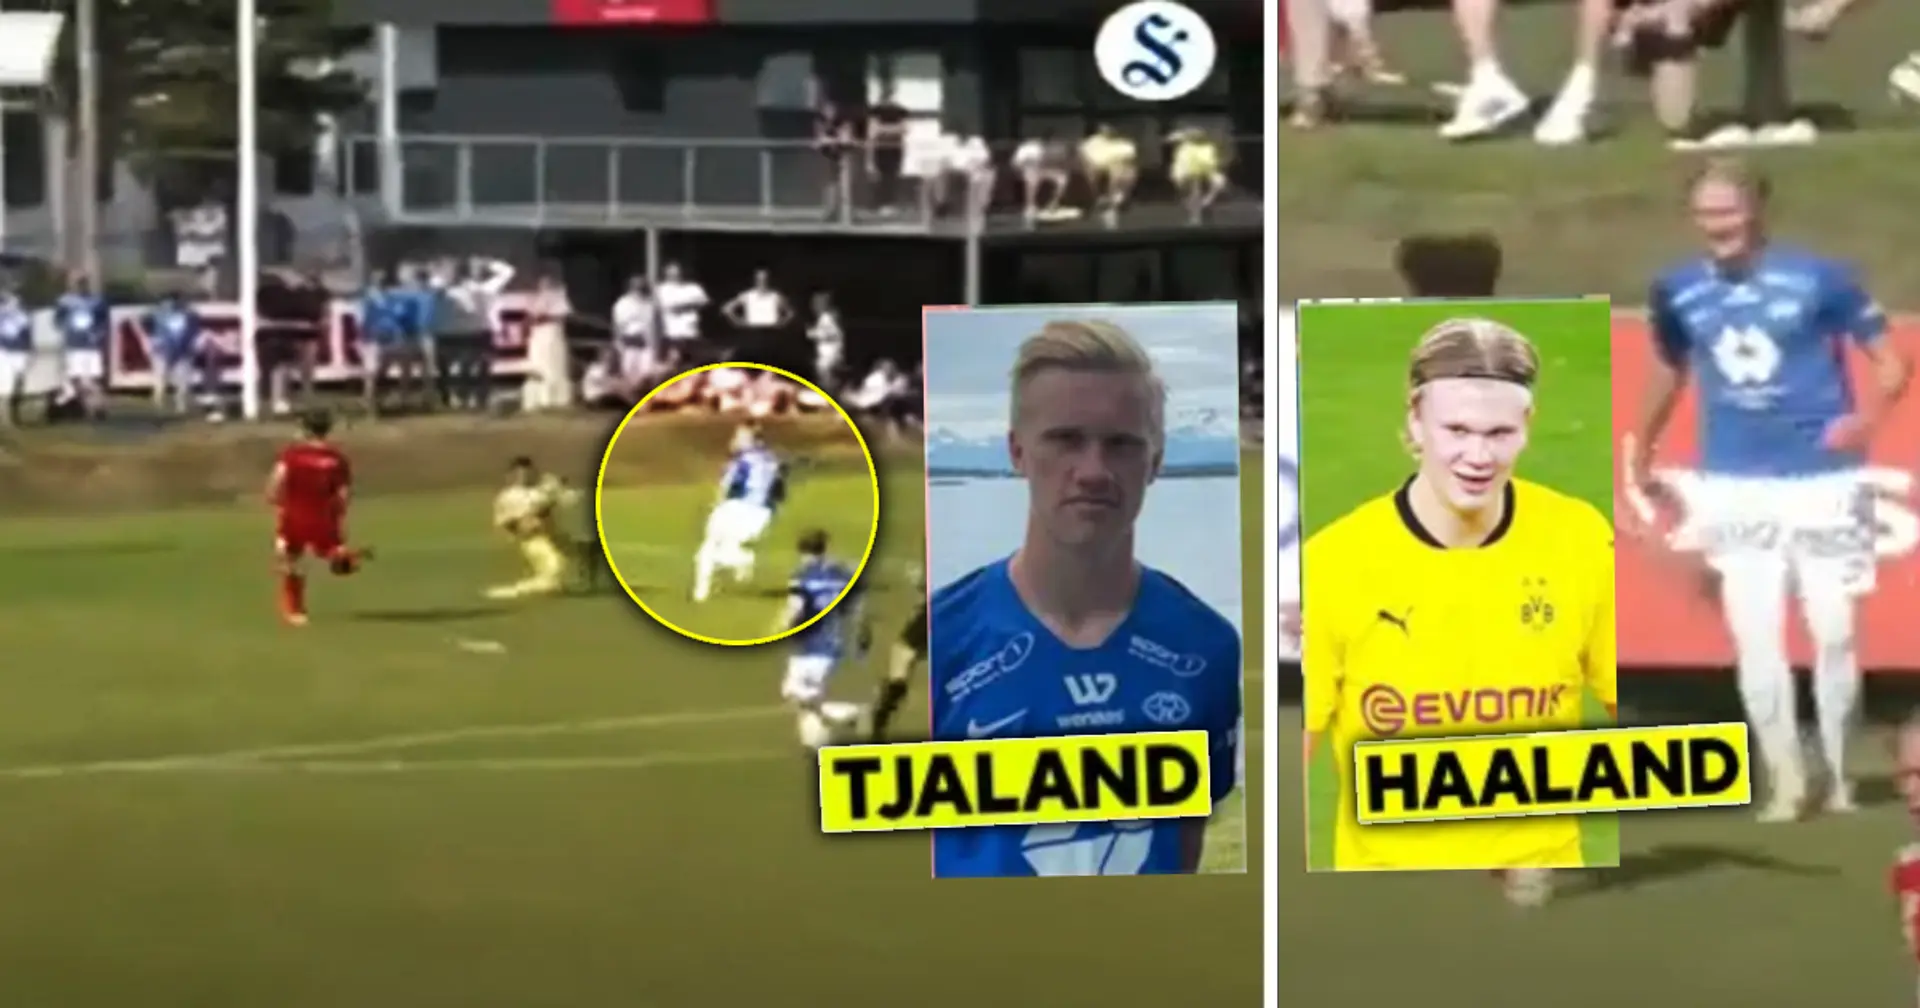 Albert Braut Tjaaland scores on senior Molde debut like his cousin Erling Haaland